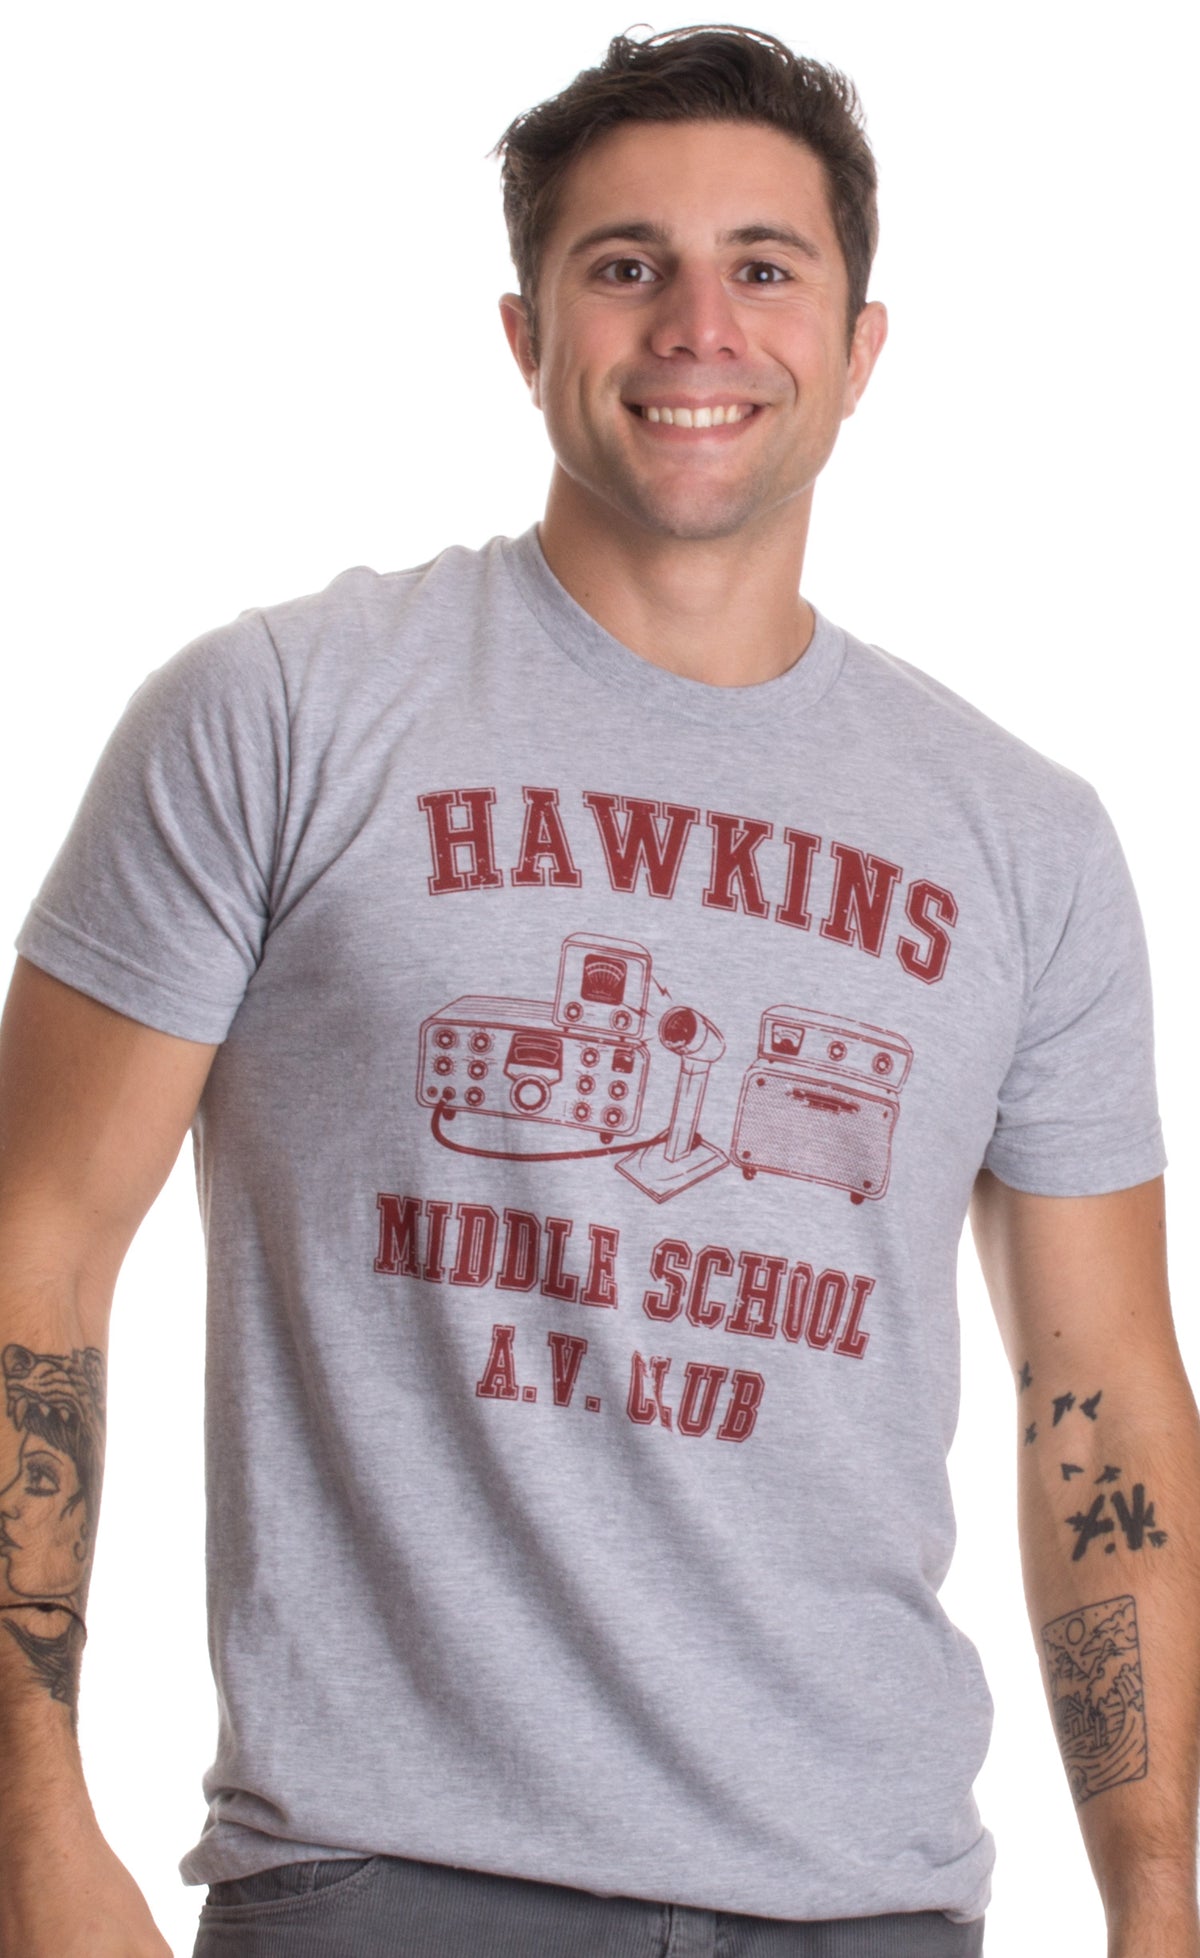 Hawkins Middle School A.V. Club | Vintage Style 80s Costume AV Hawkin T-shirt